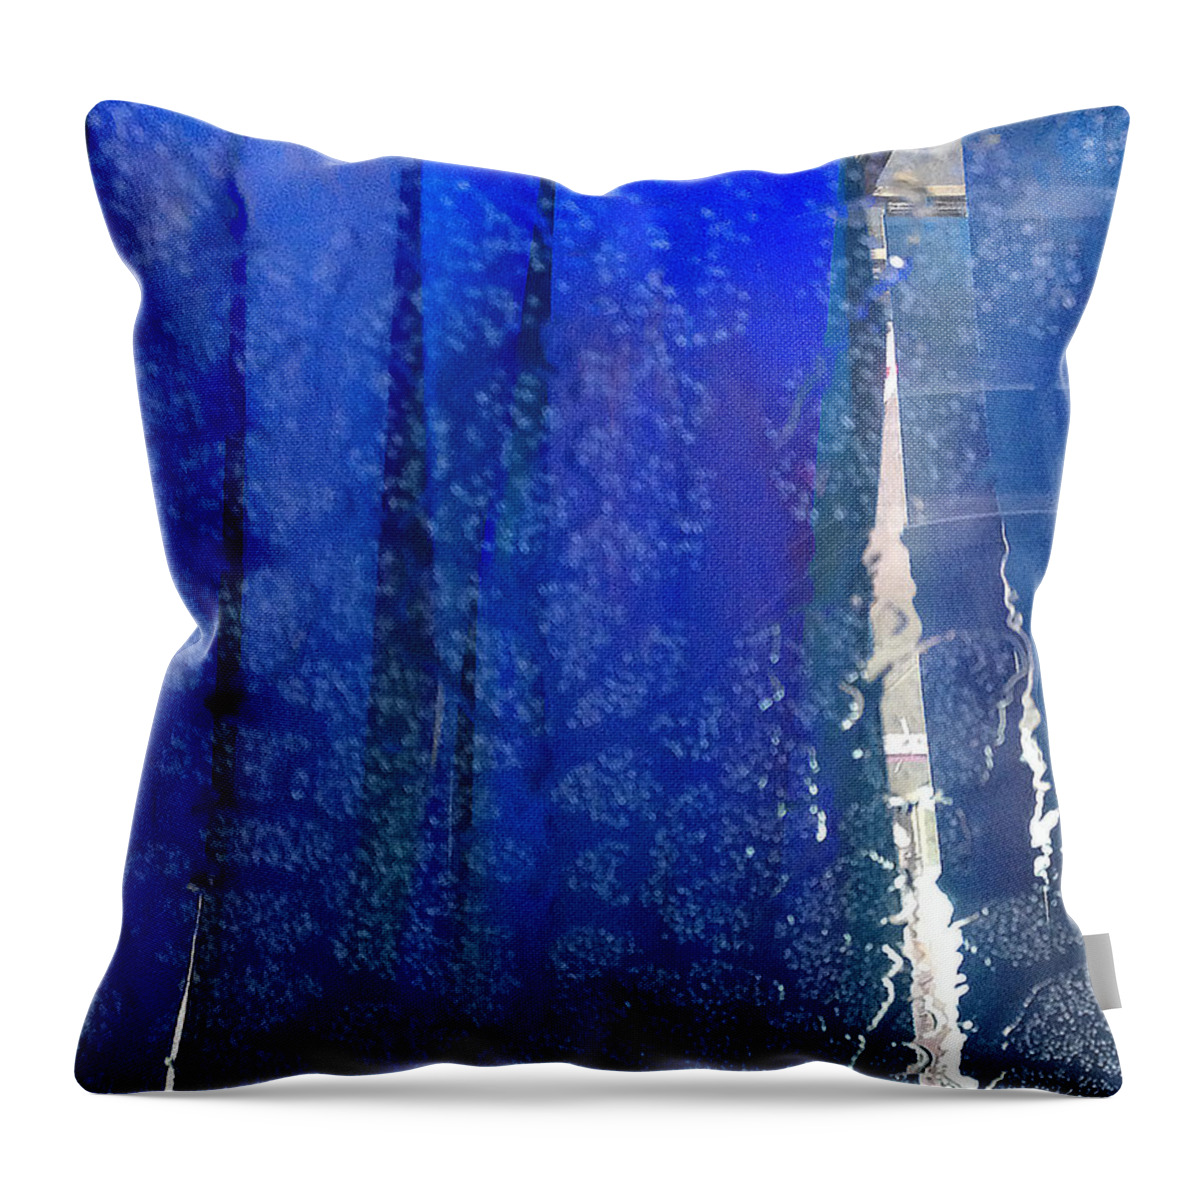 Blue Throw Pillow featuring the photograph White Stripe by Anne Cameron Cutri